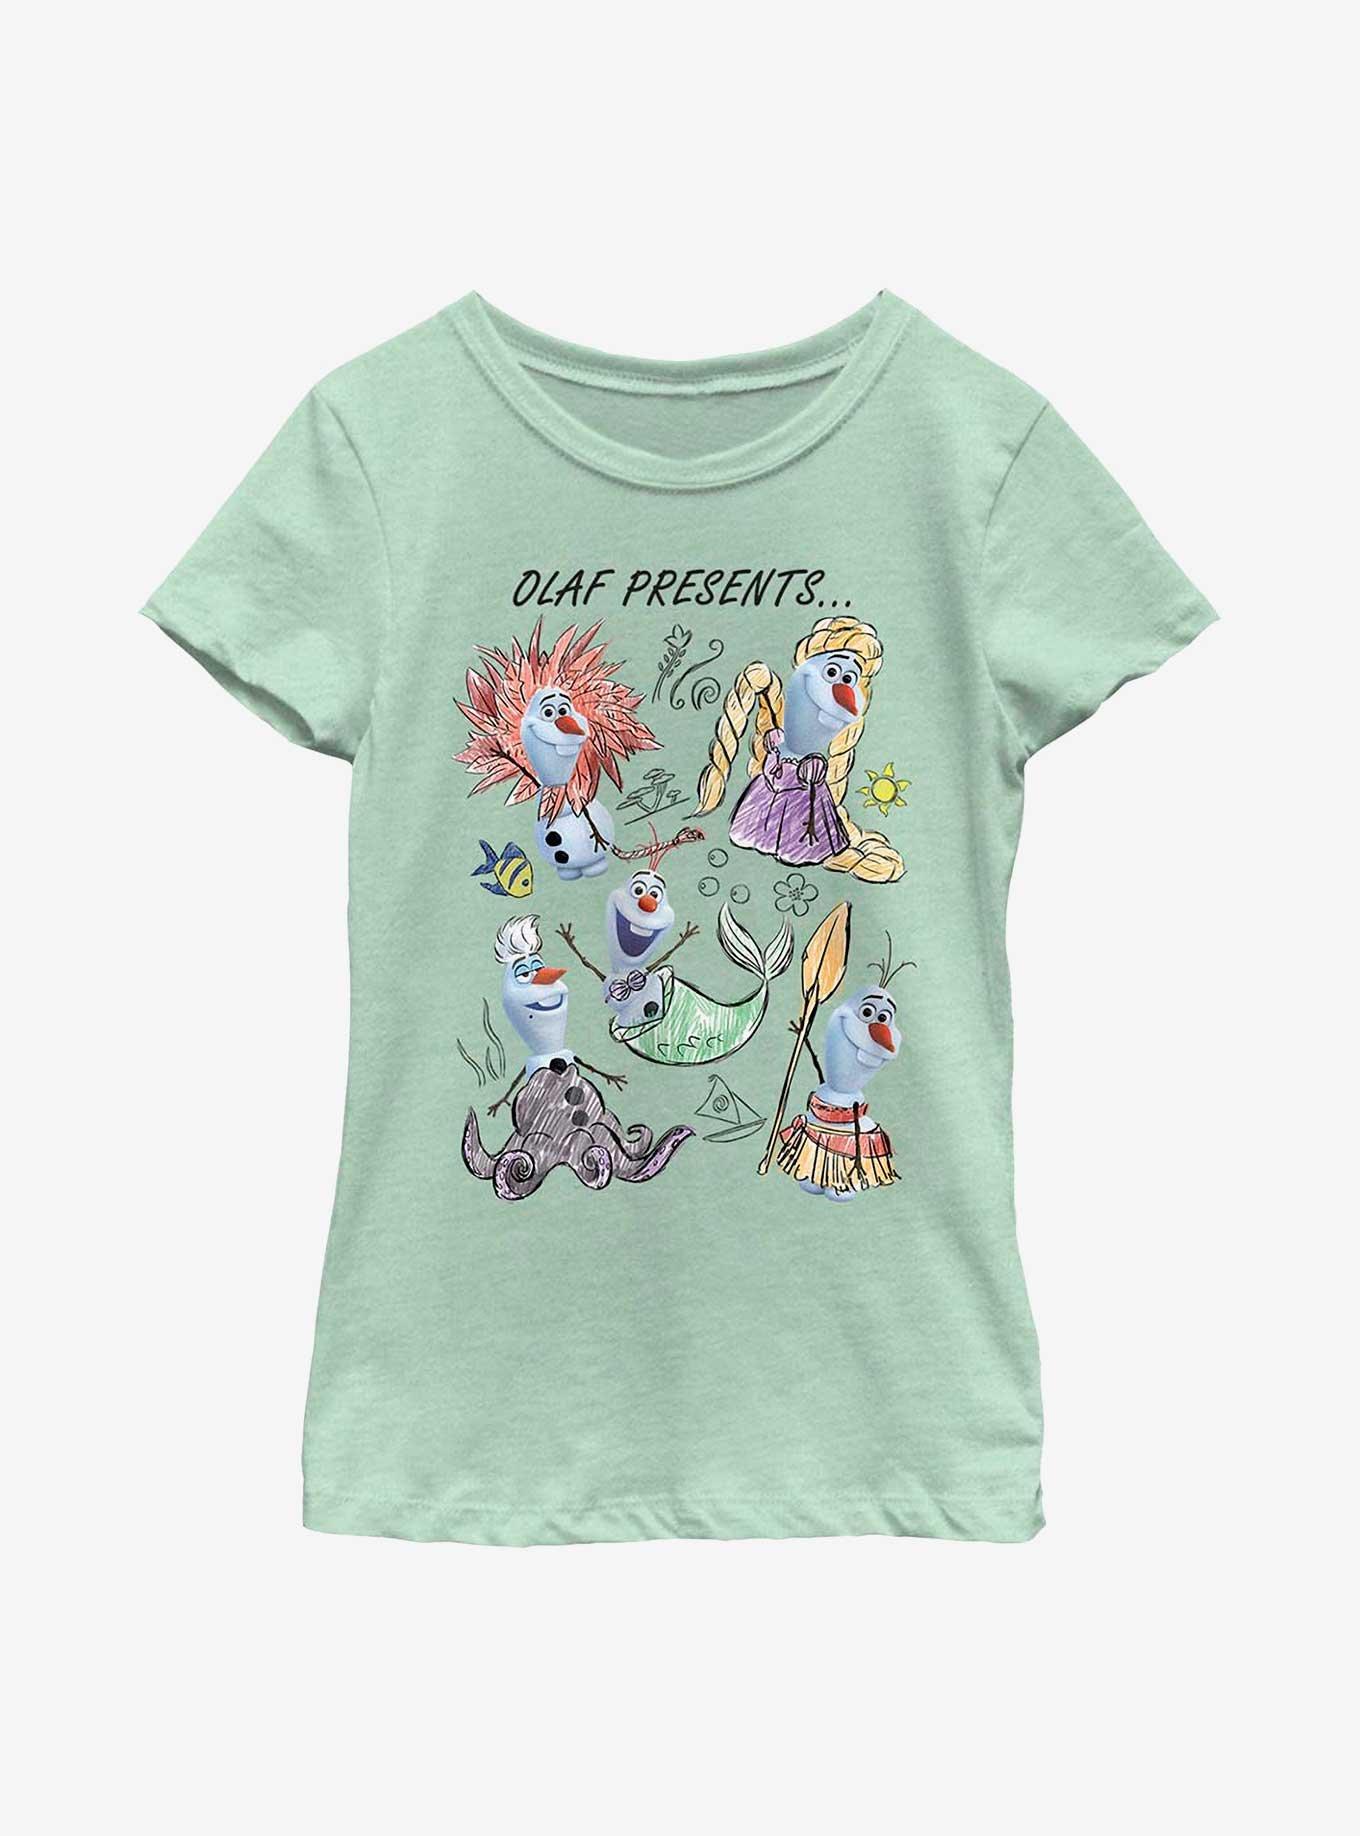 Disney Olaf Presents Olaf Outfits Youth Girls T-Shirt, MINT, hi-res